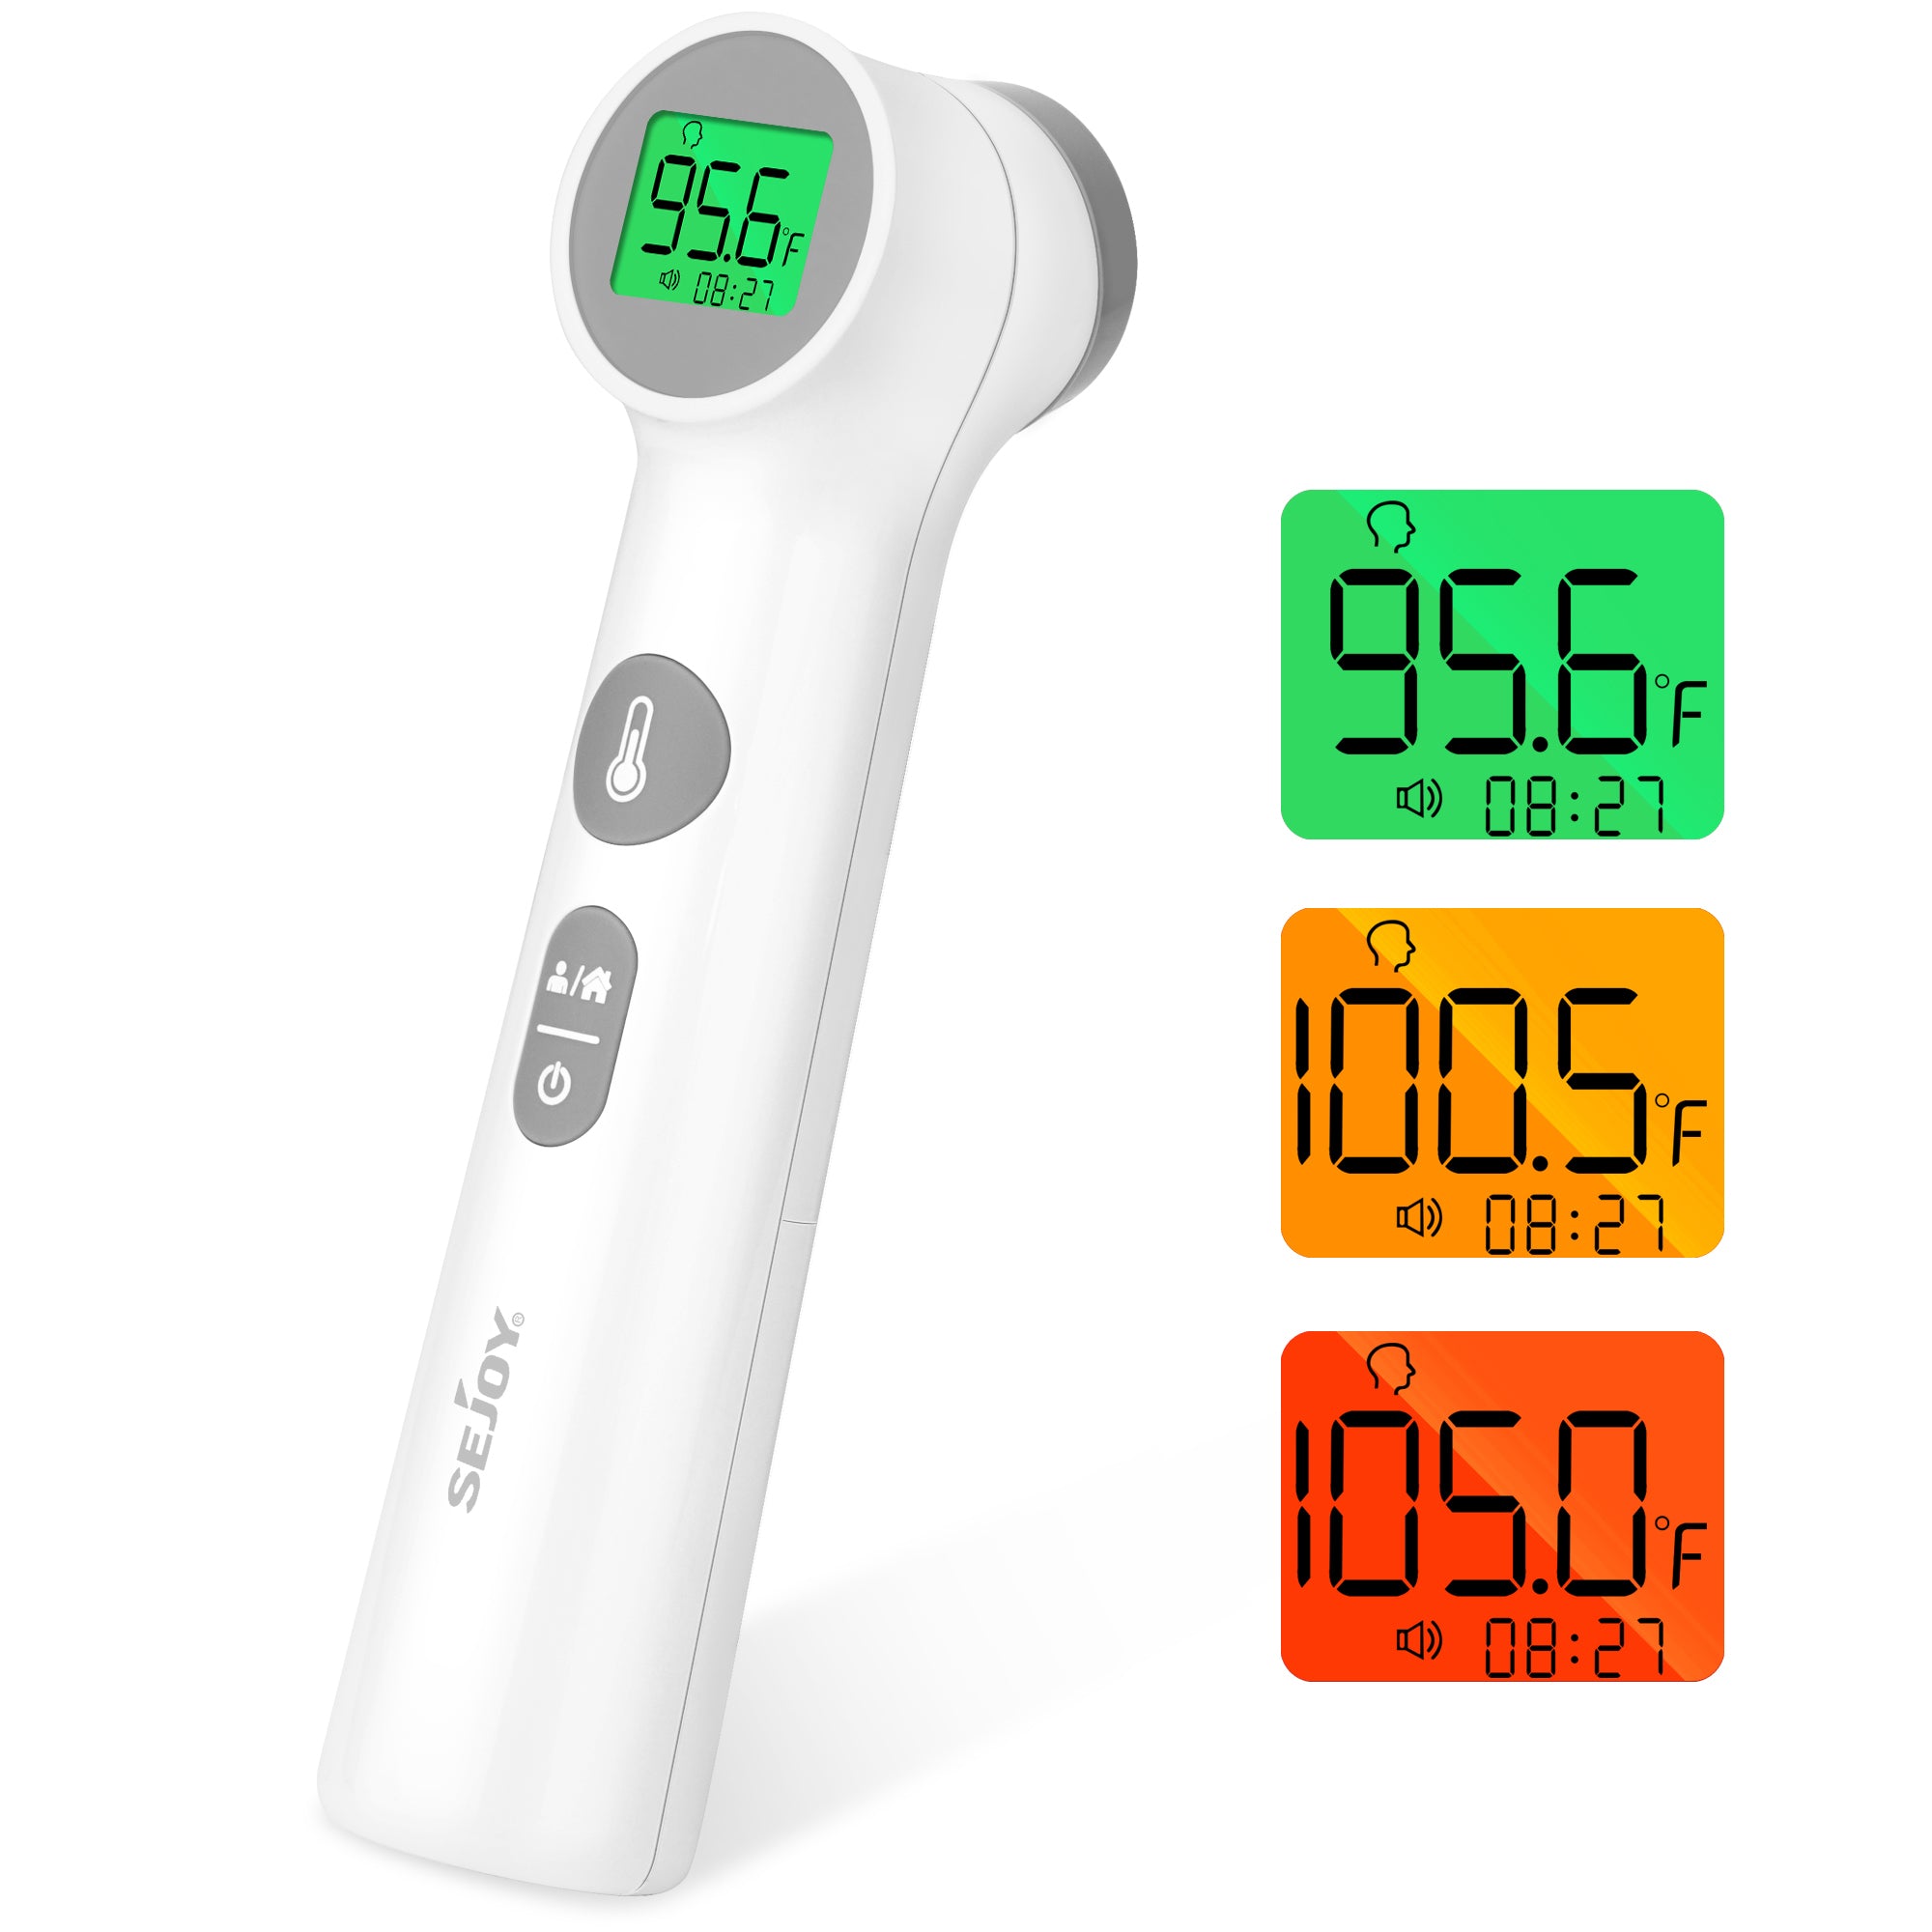  Digital Infrared Thermometer,INFURIDER YF-981B Non